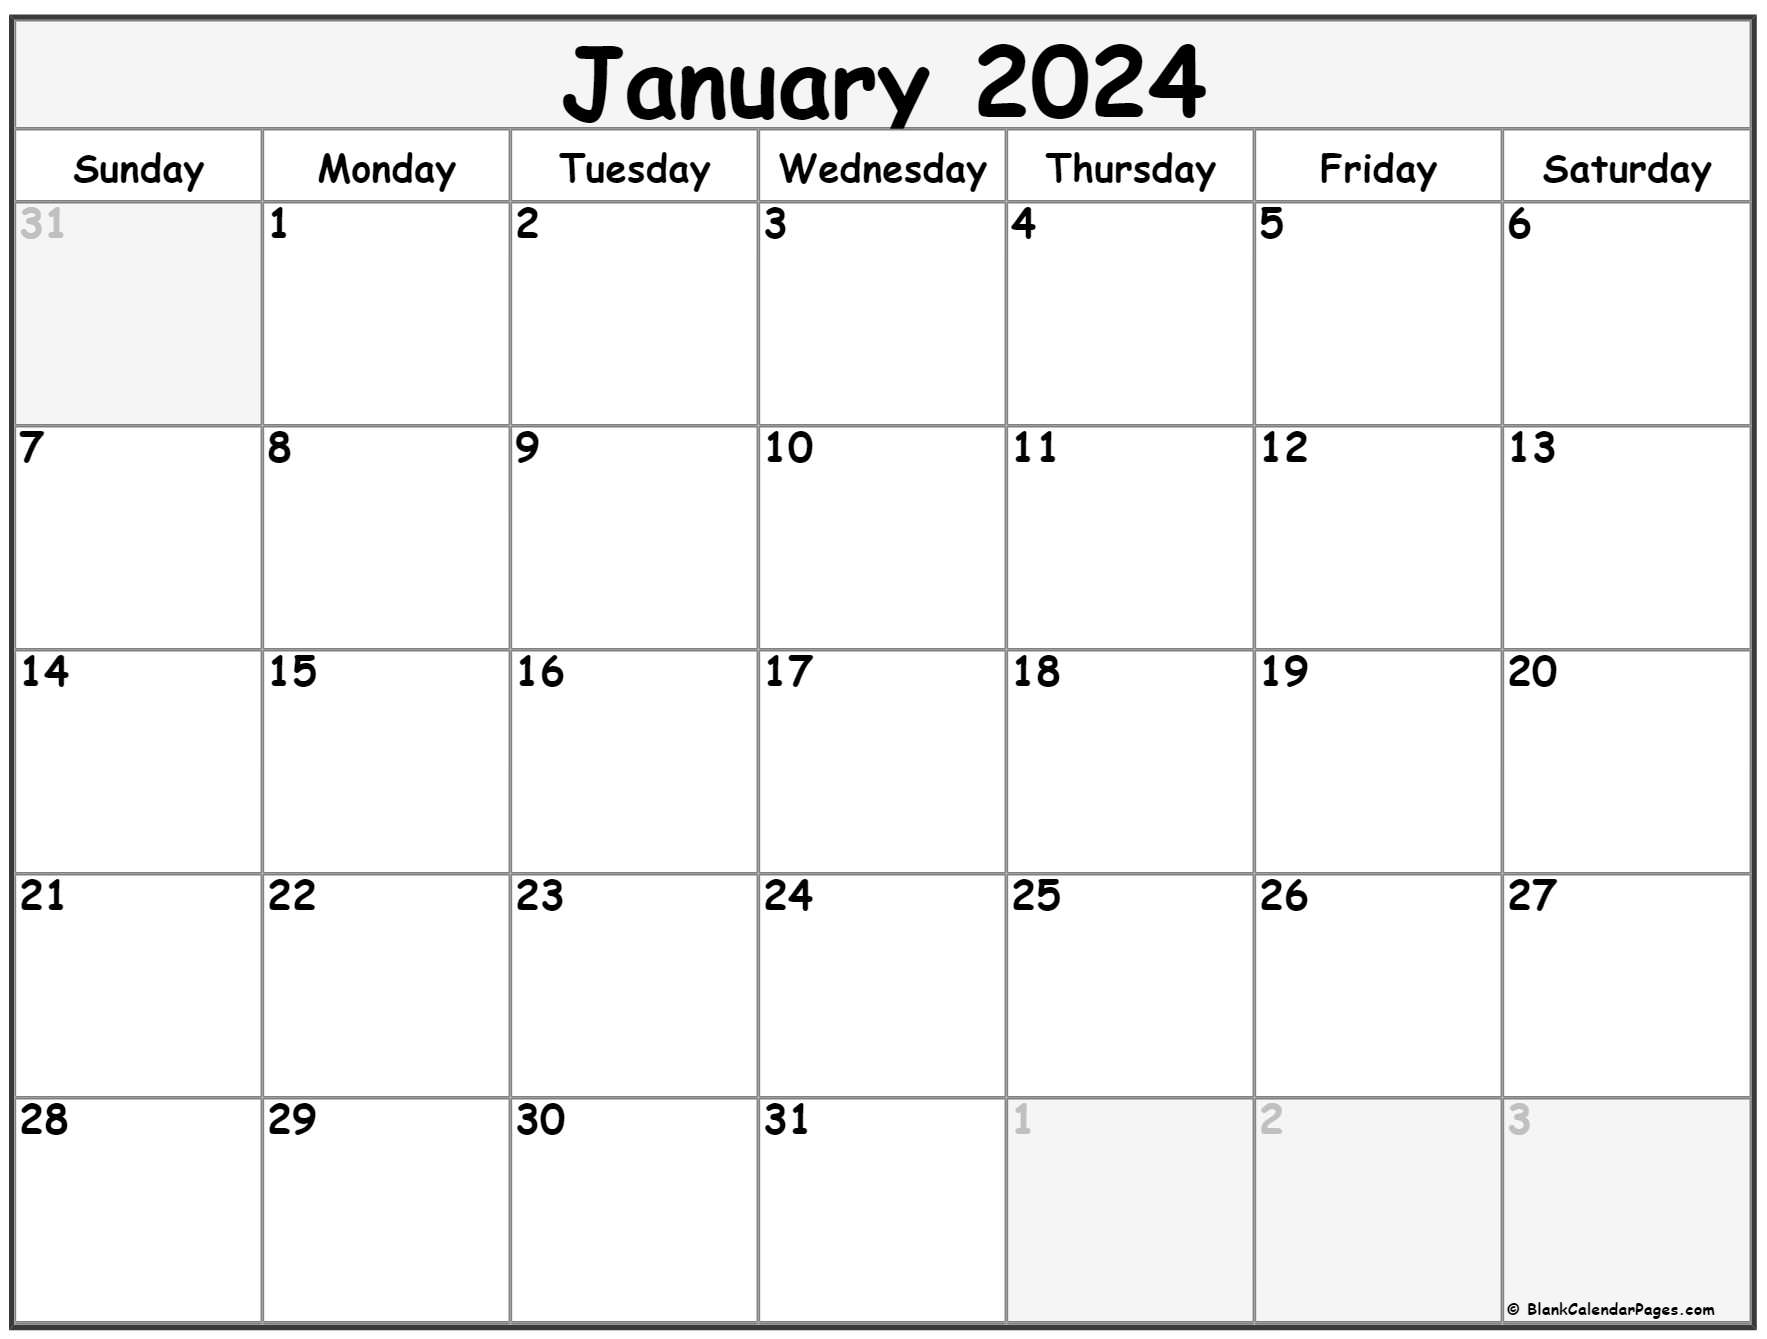 January 2024 Calendar With Holidays List Latest Top Most Popular 